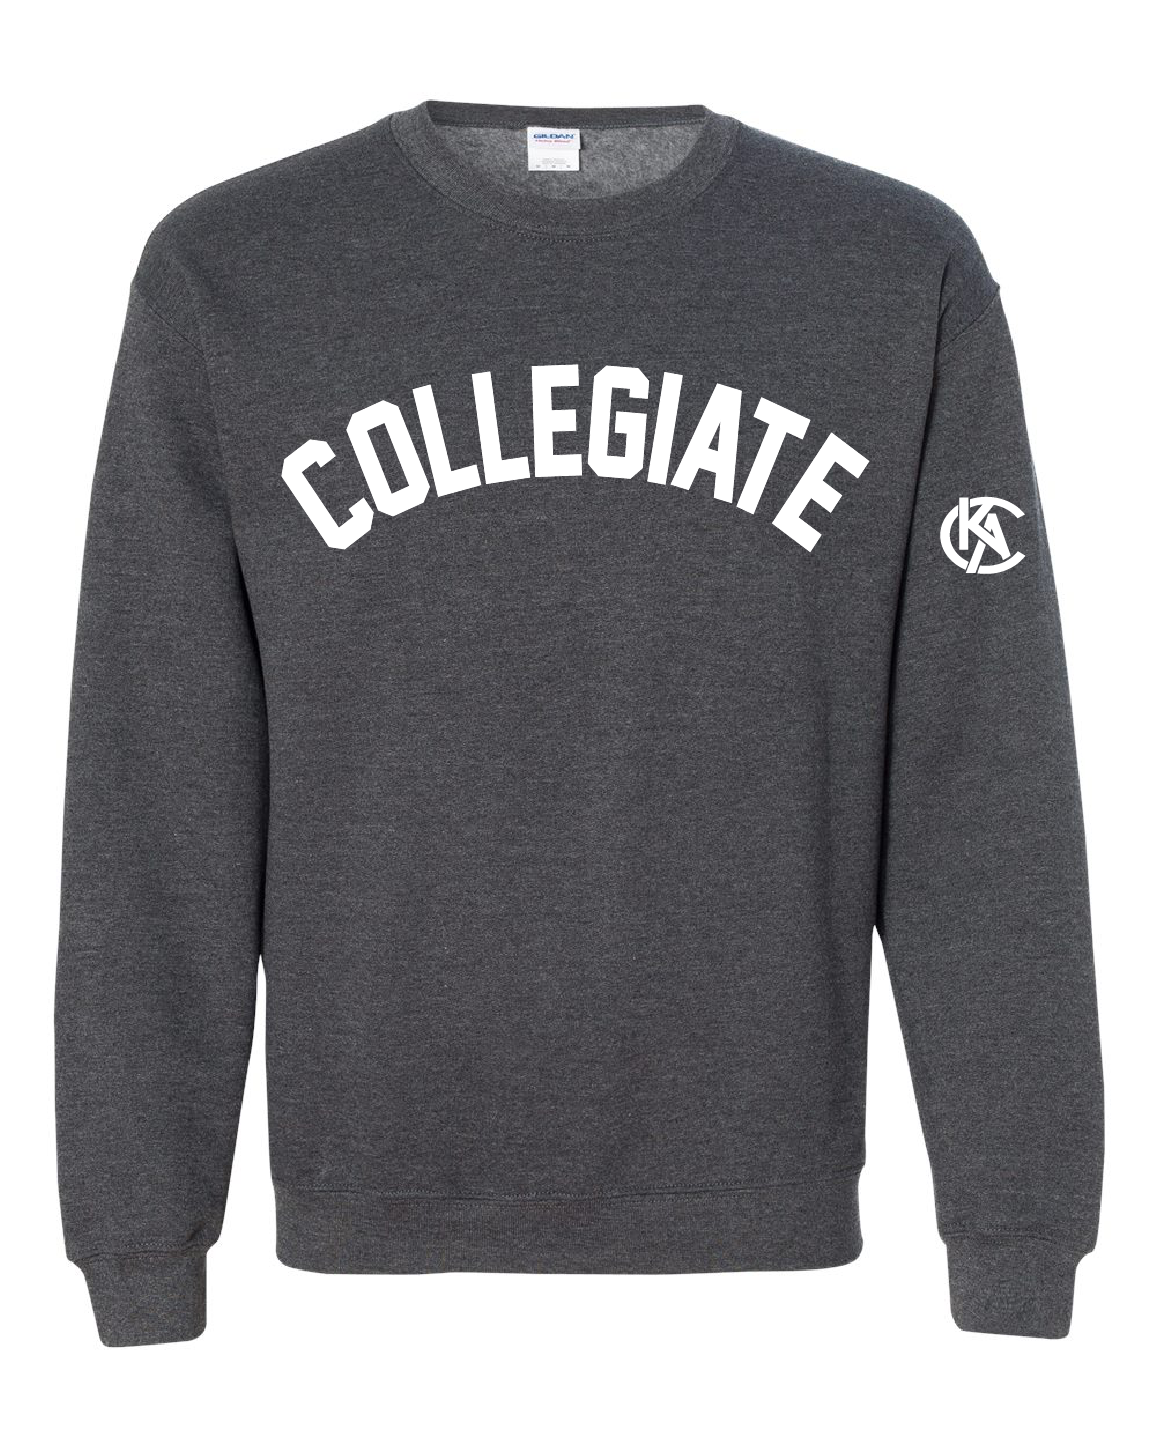 KAC Collegiate Sweatshirt